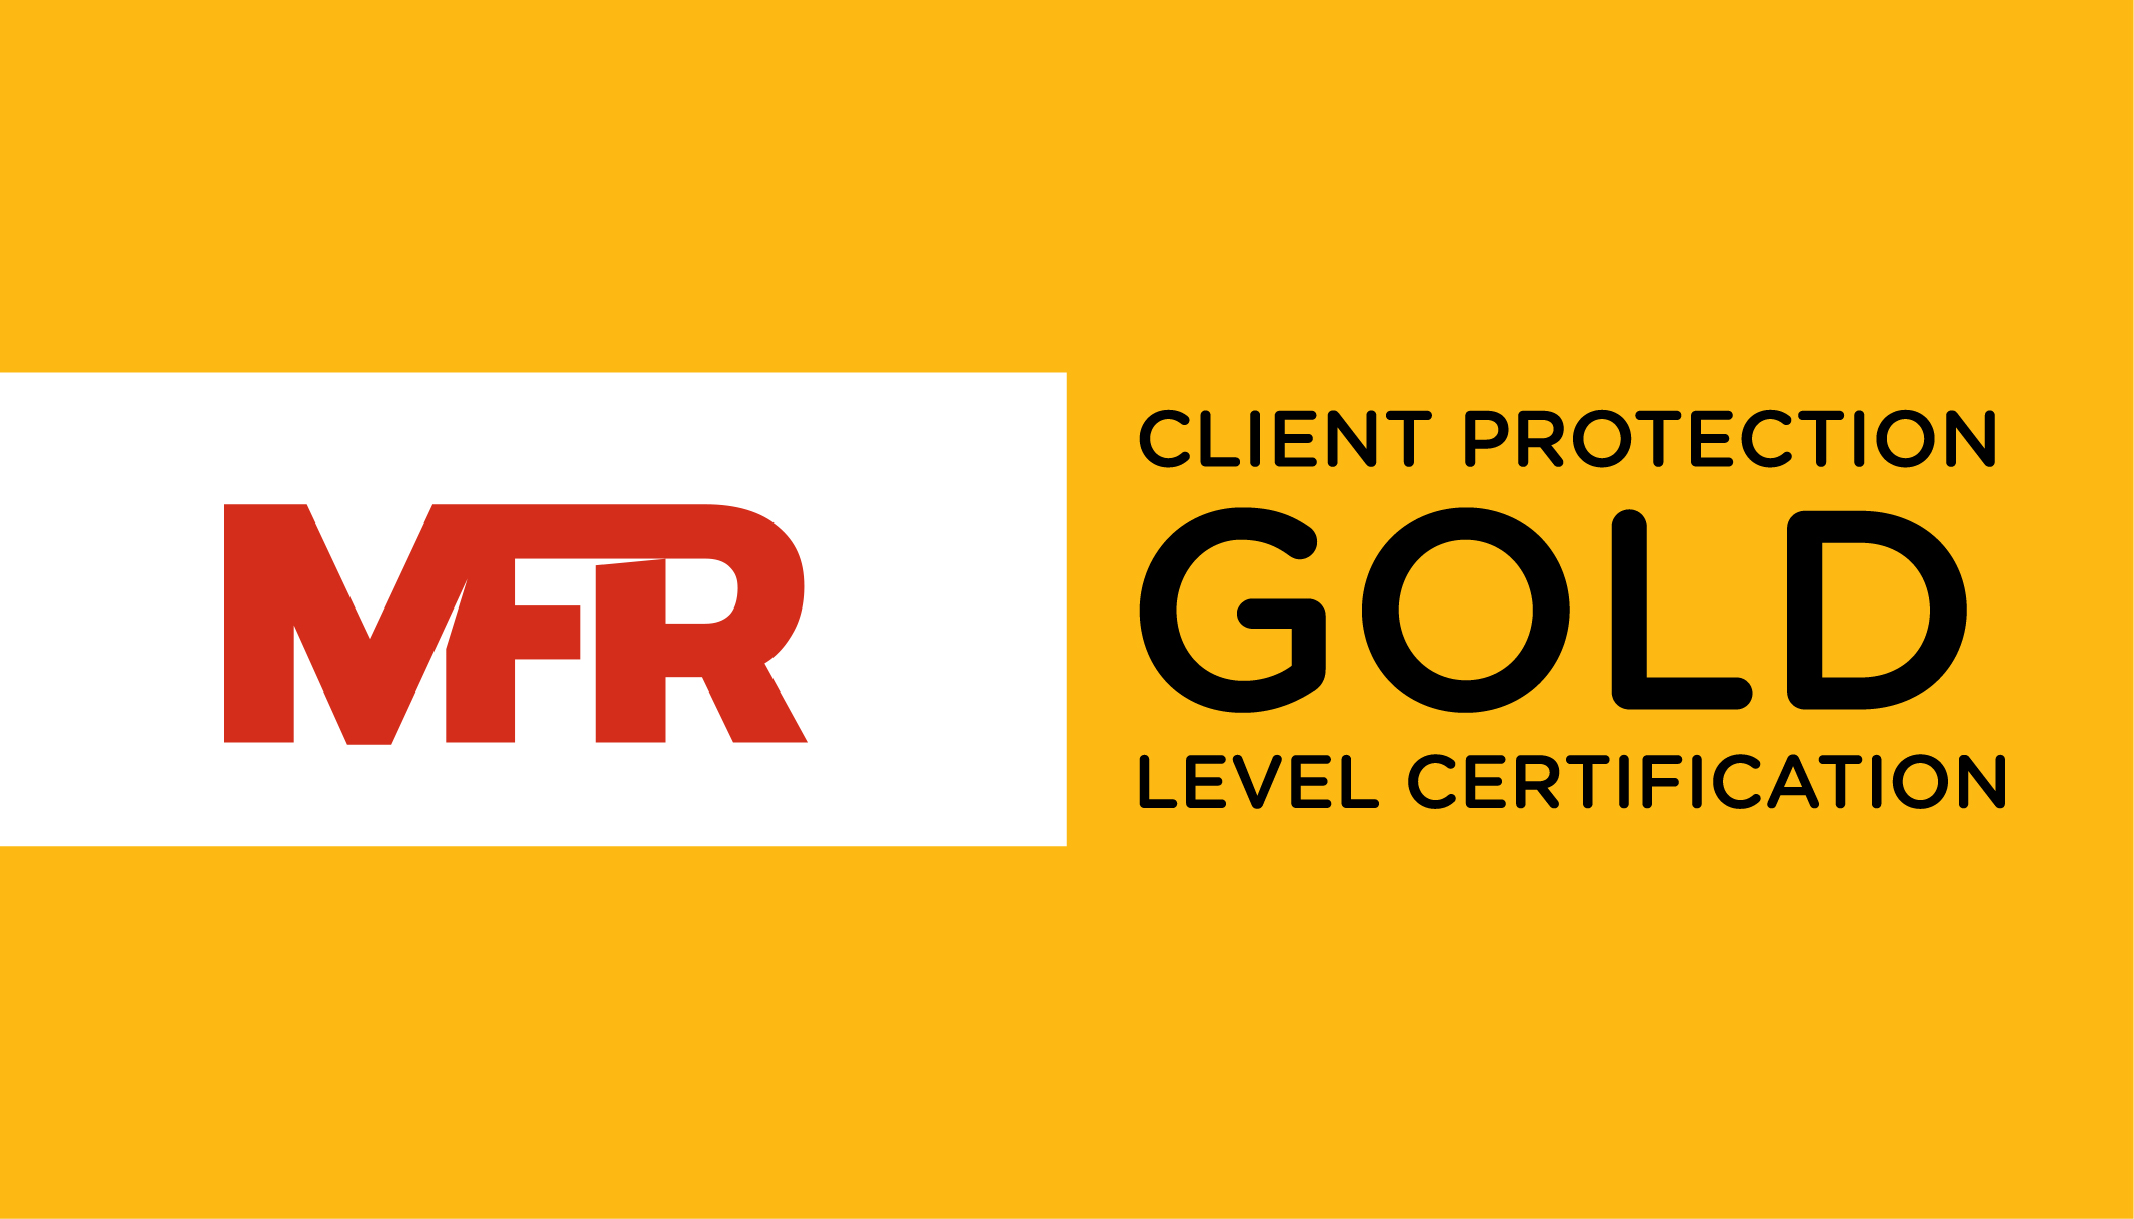 Svasti Microfinance MFR Client Protection Certification 2022